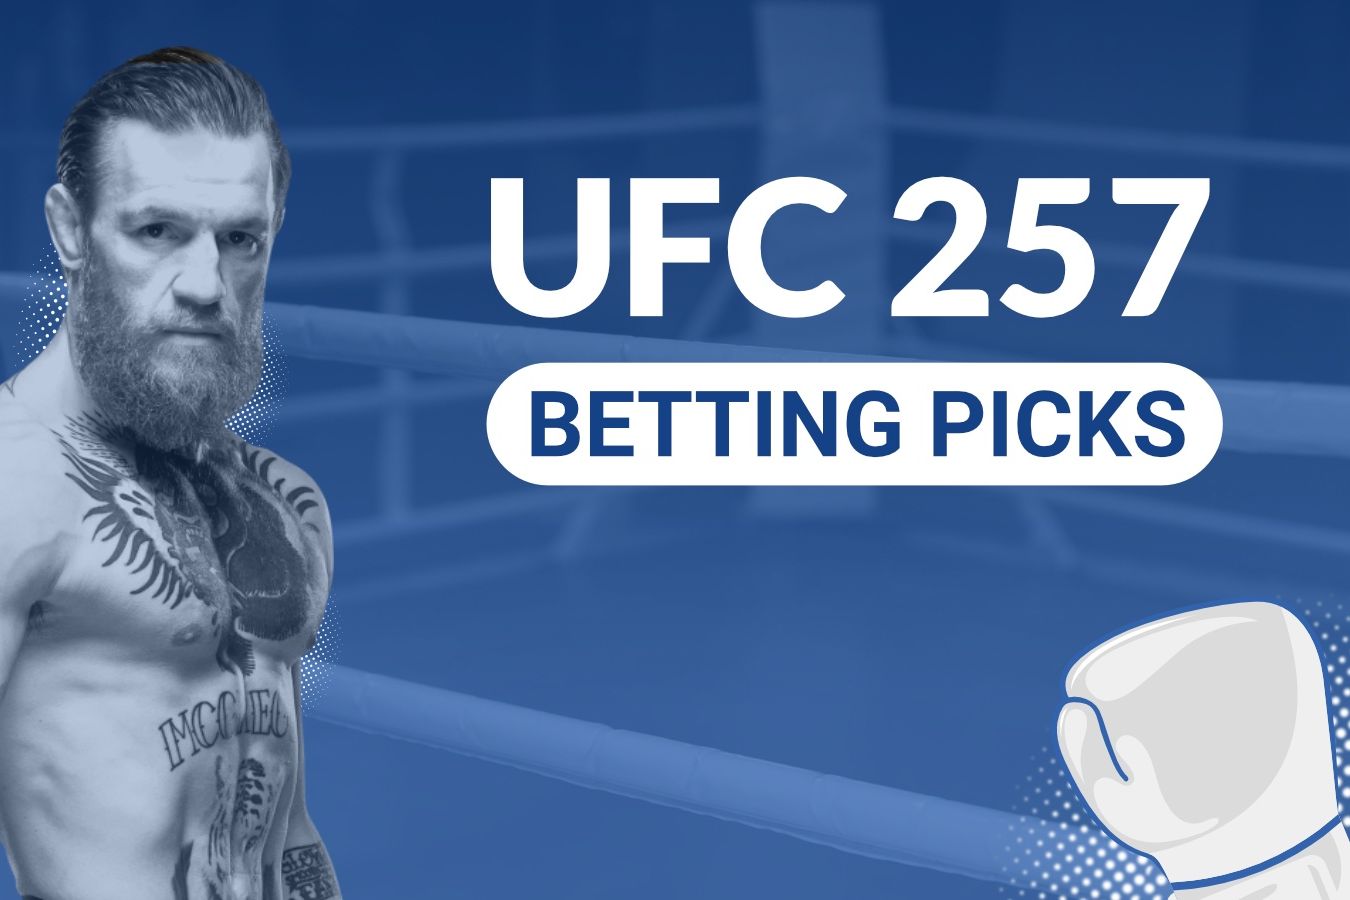 UFC 257: McGregor To Make Winning Return